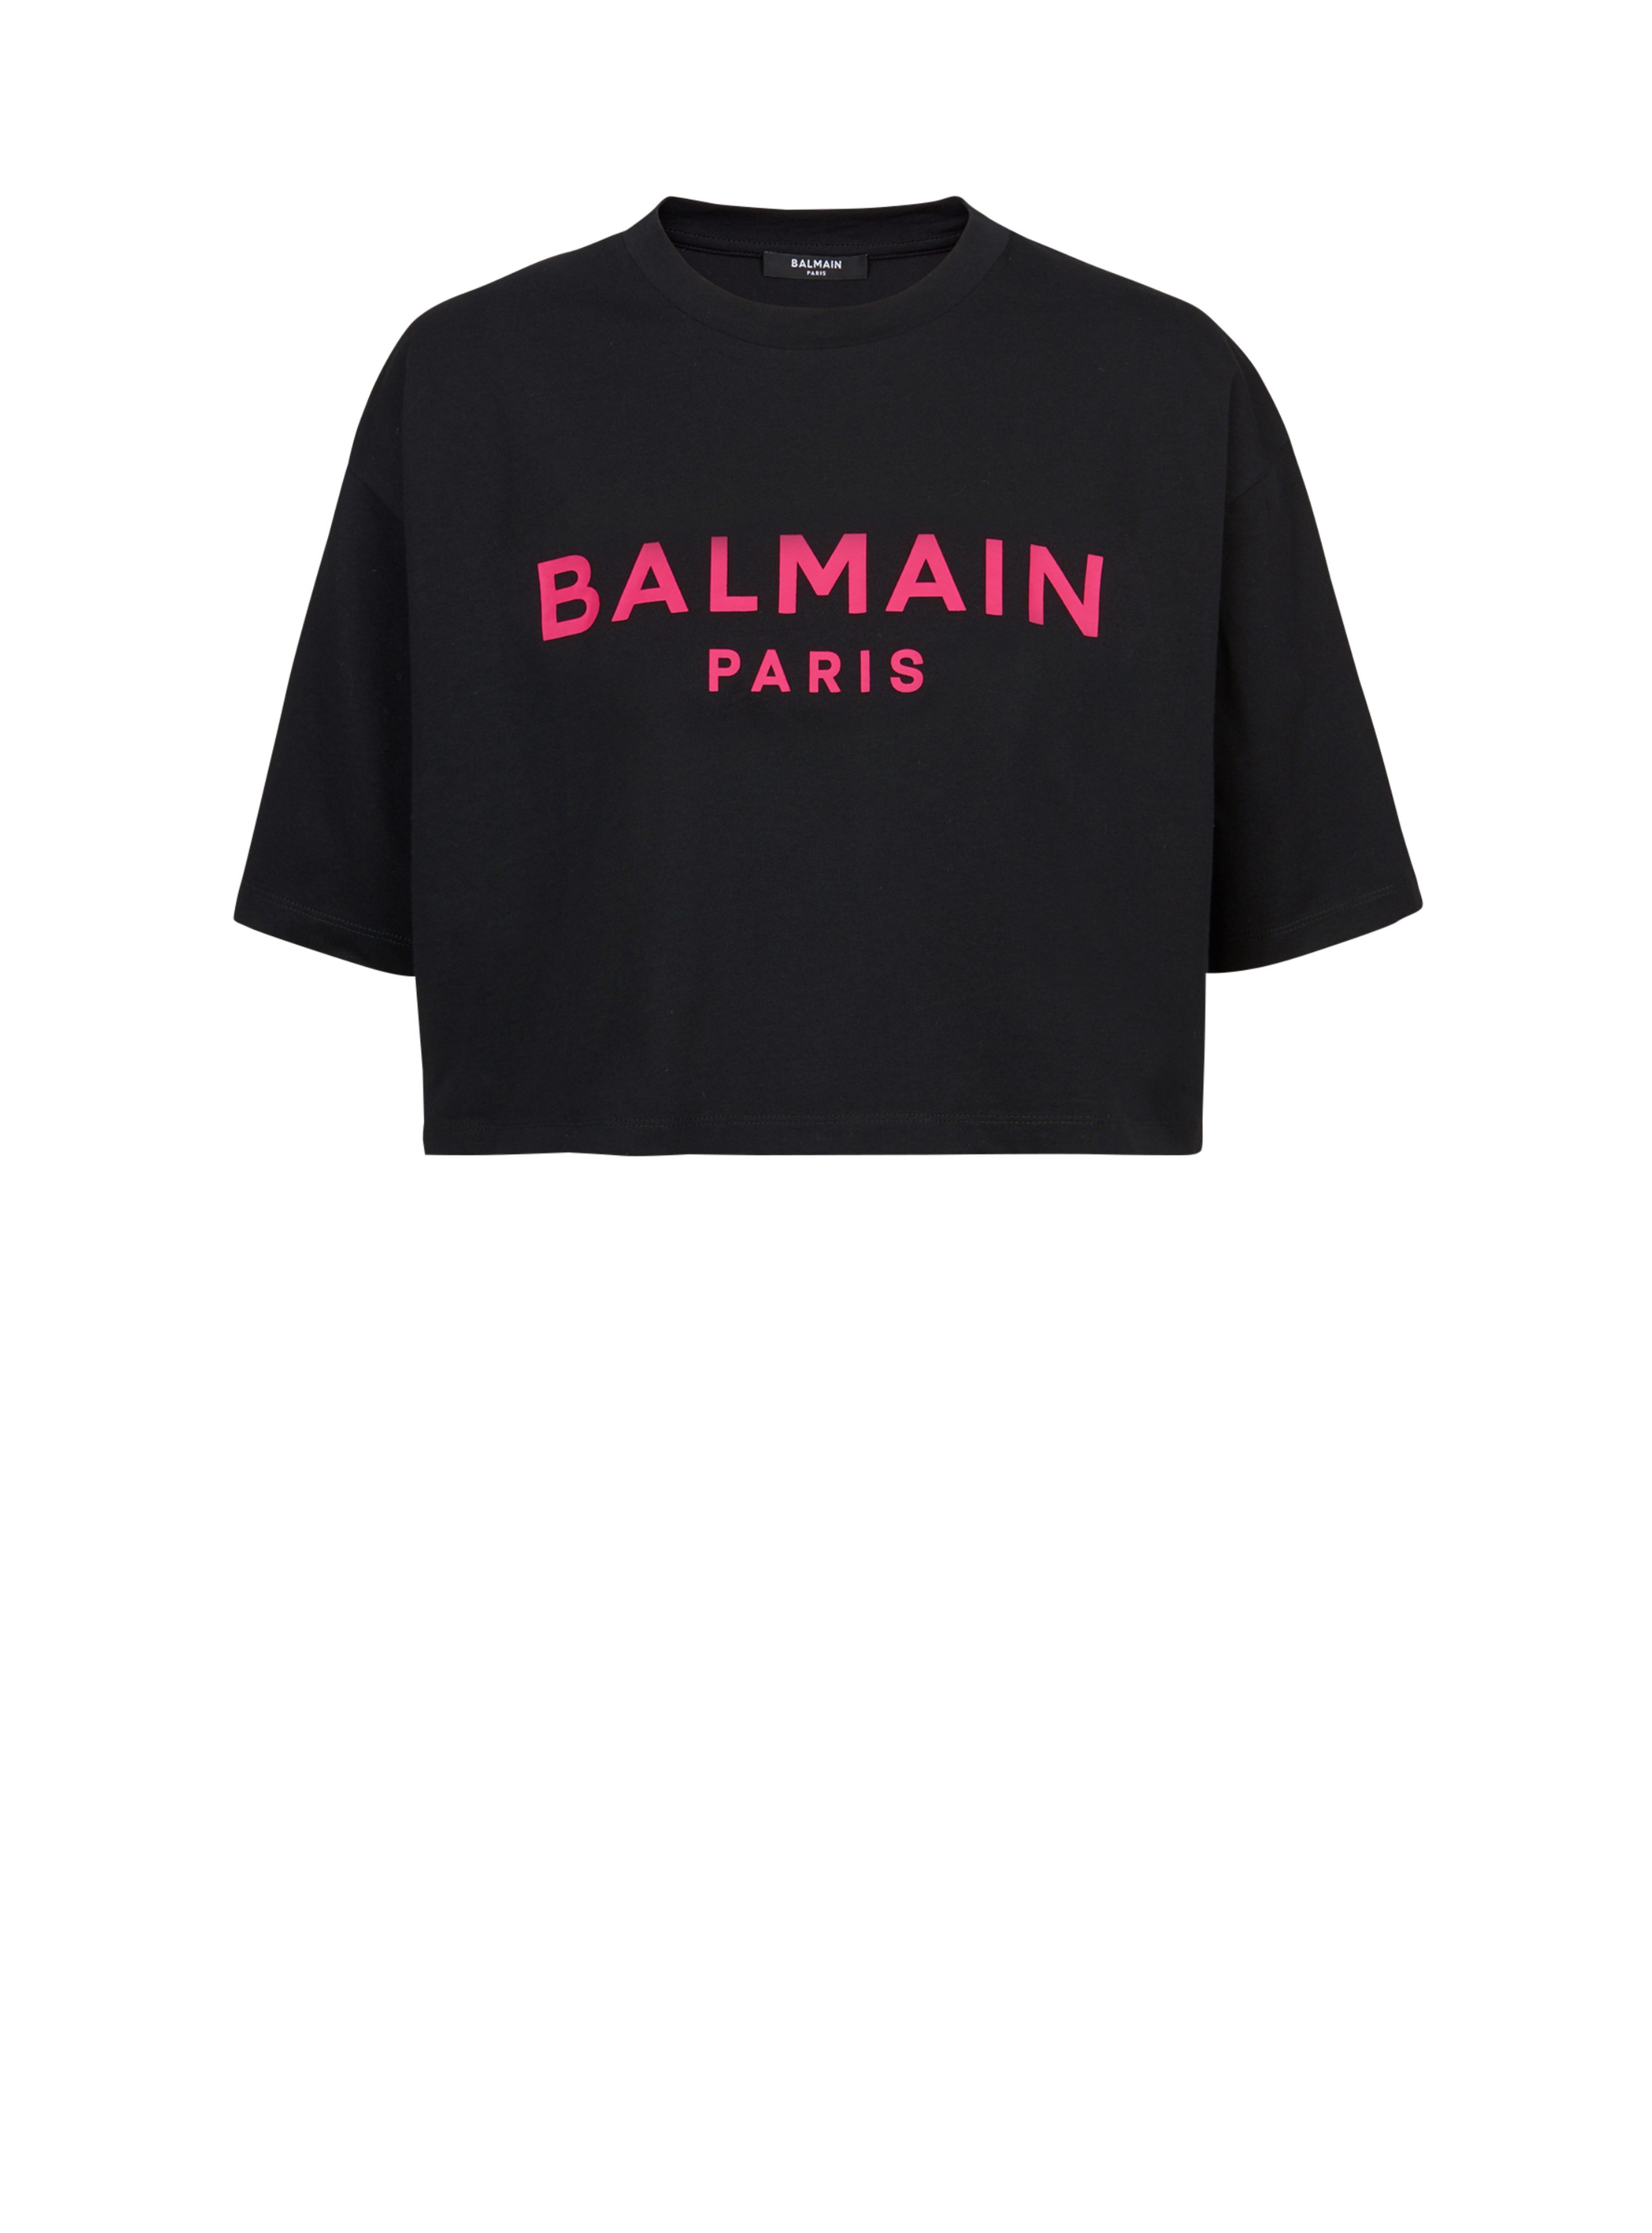 T-shirt corta in cotone con logo Balmain, rosa